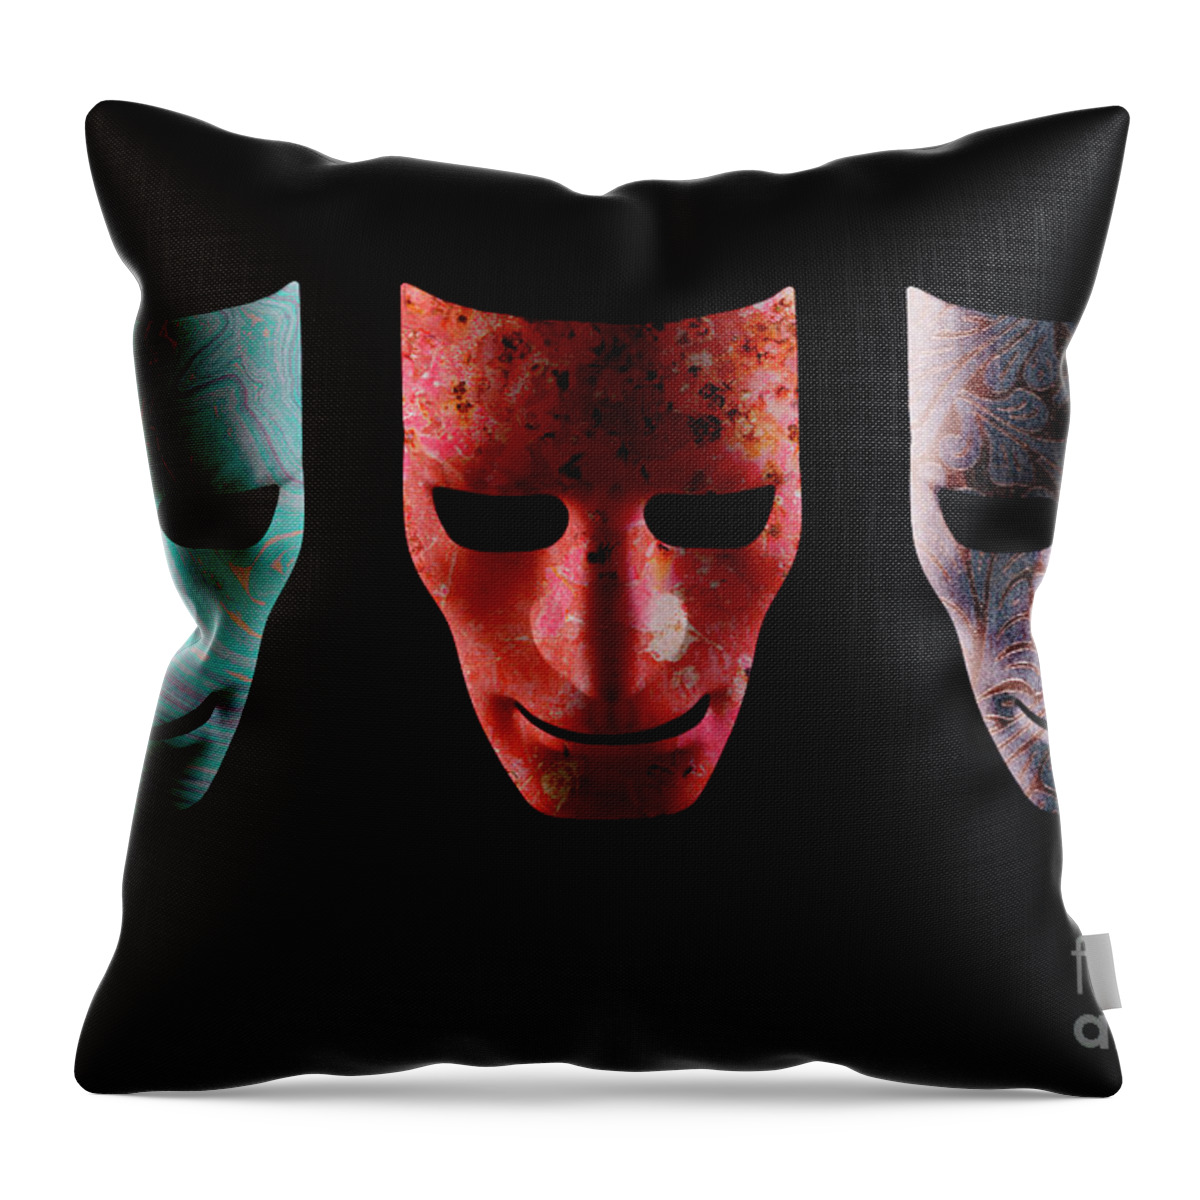 Mask Throw Pillow featuring the photograph Three textured AI robotic face masks by Simon Bratt